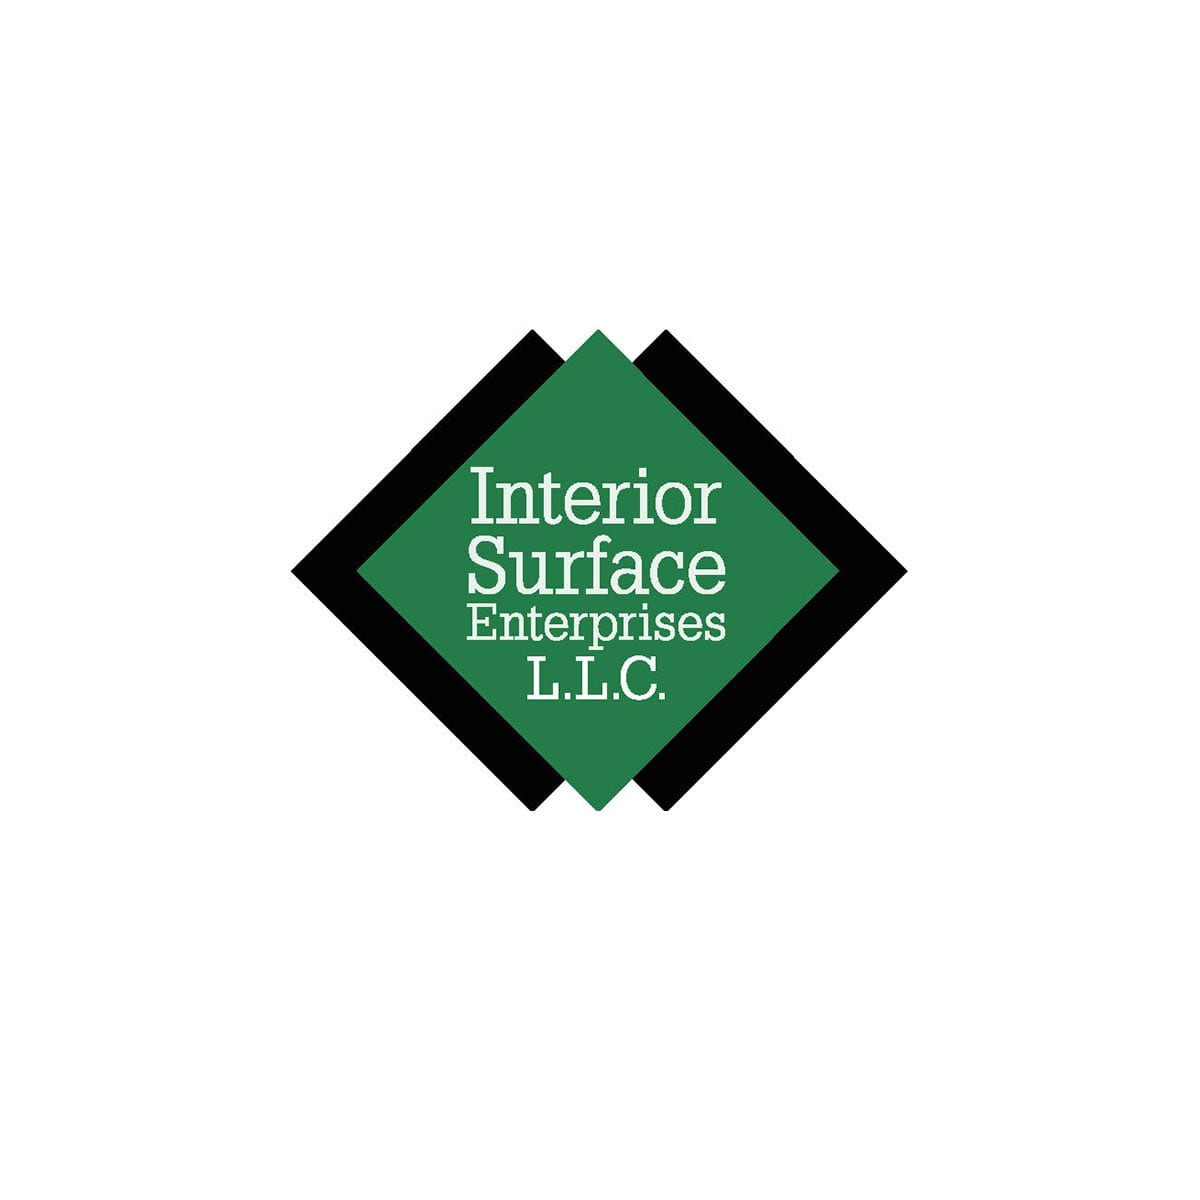 Interior Surface Enterprises